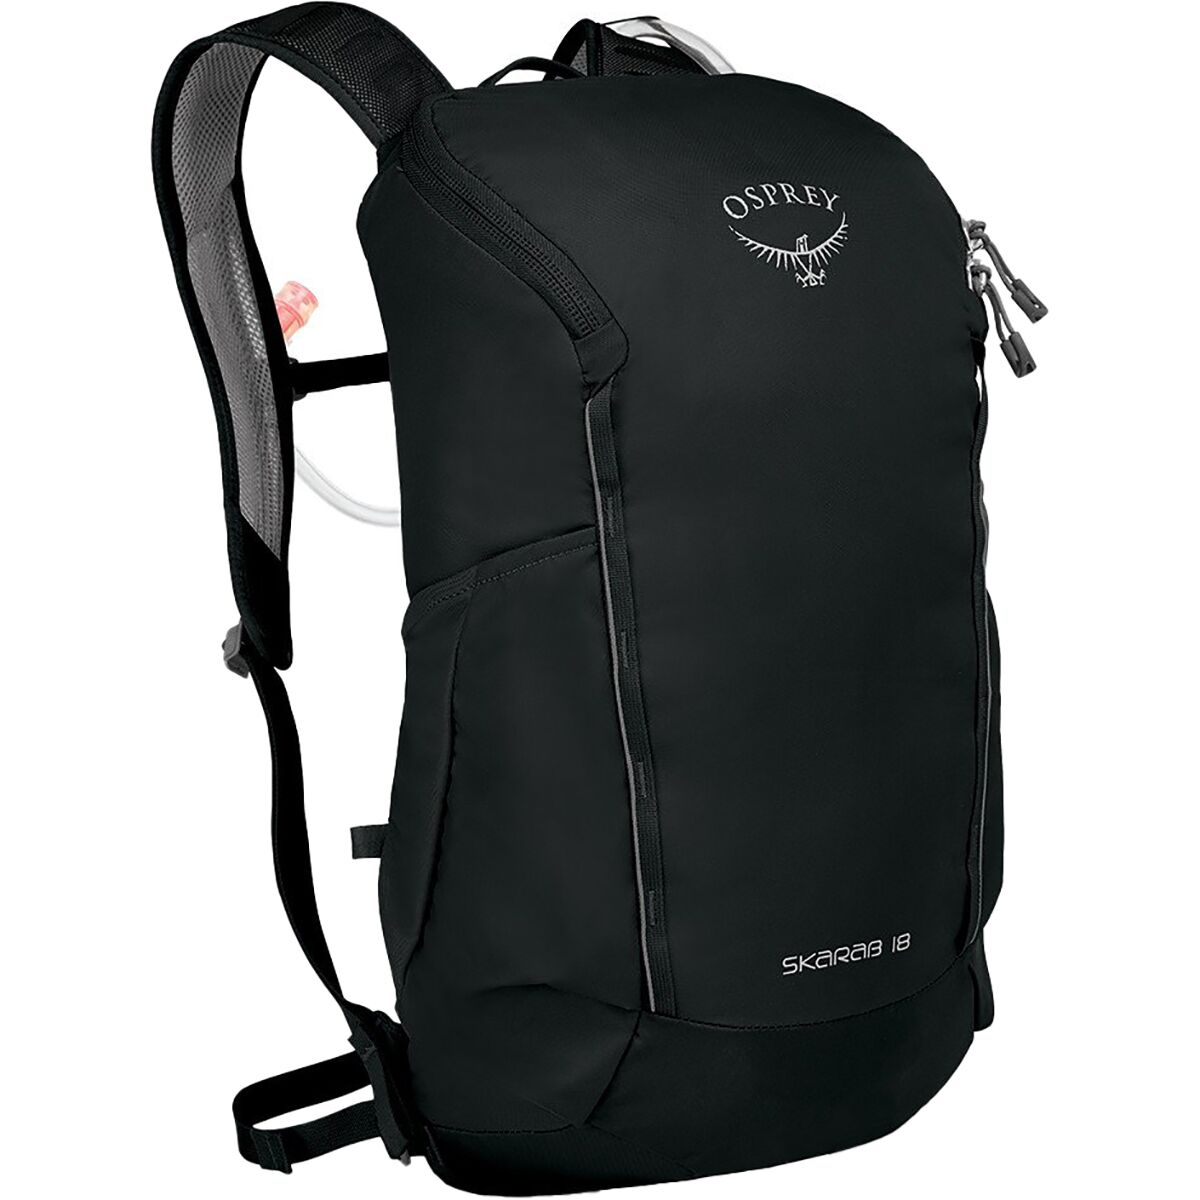 Osprey Packs Skarab 18L Backpack